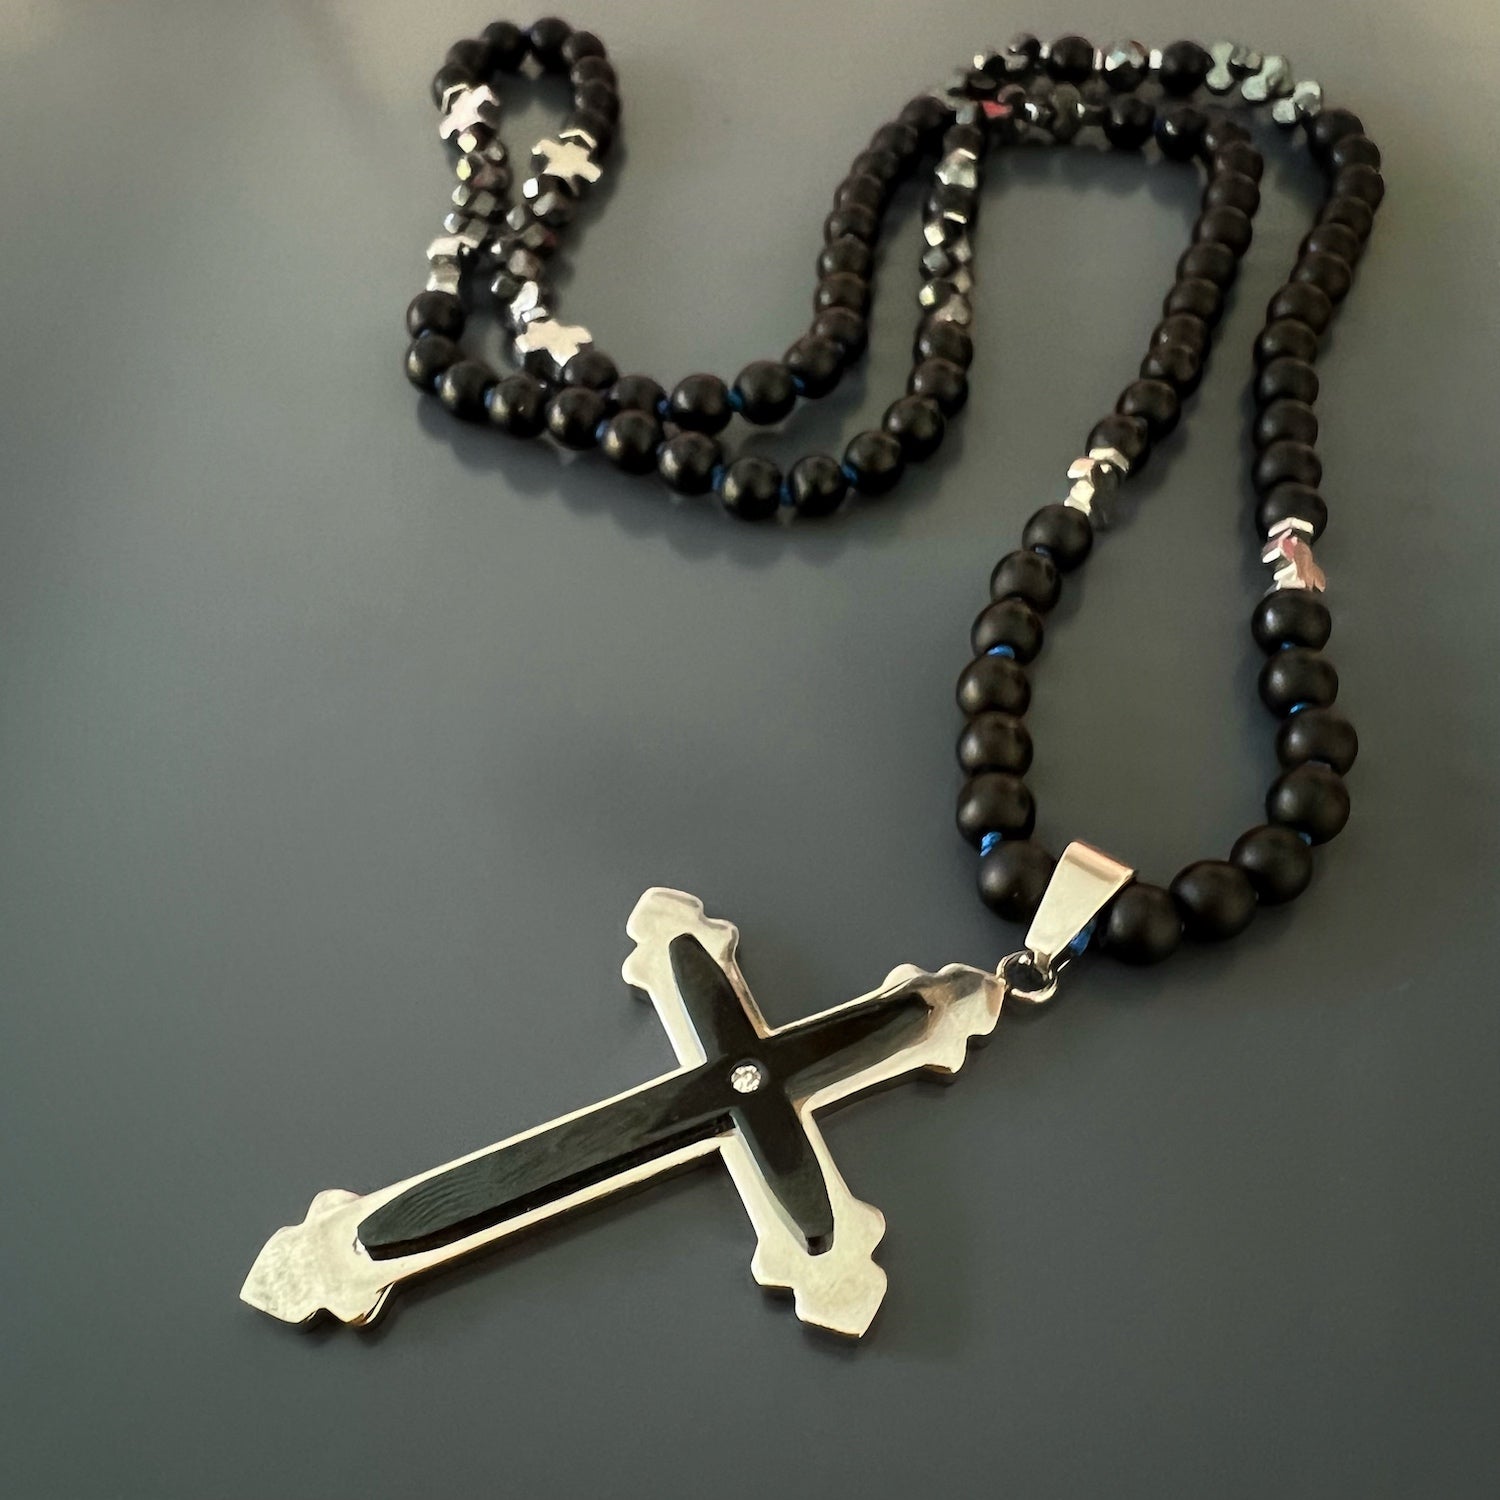 Black Onyx Cross Necklace with Religious Symbolism